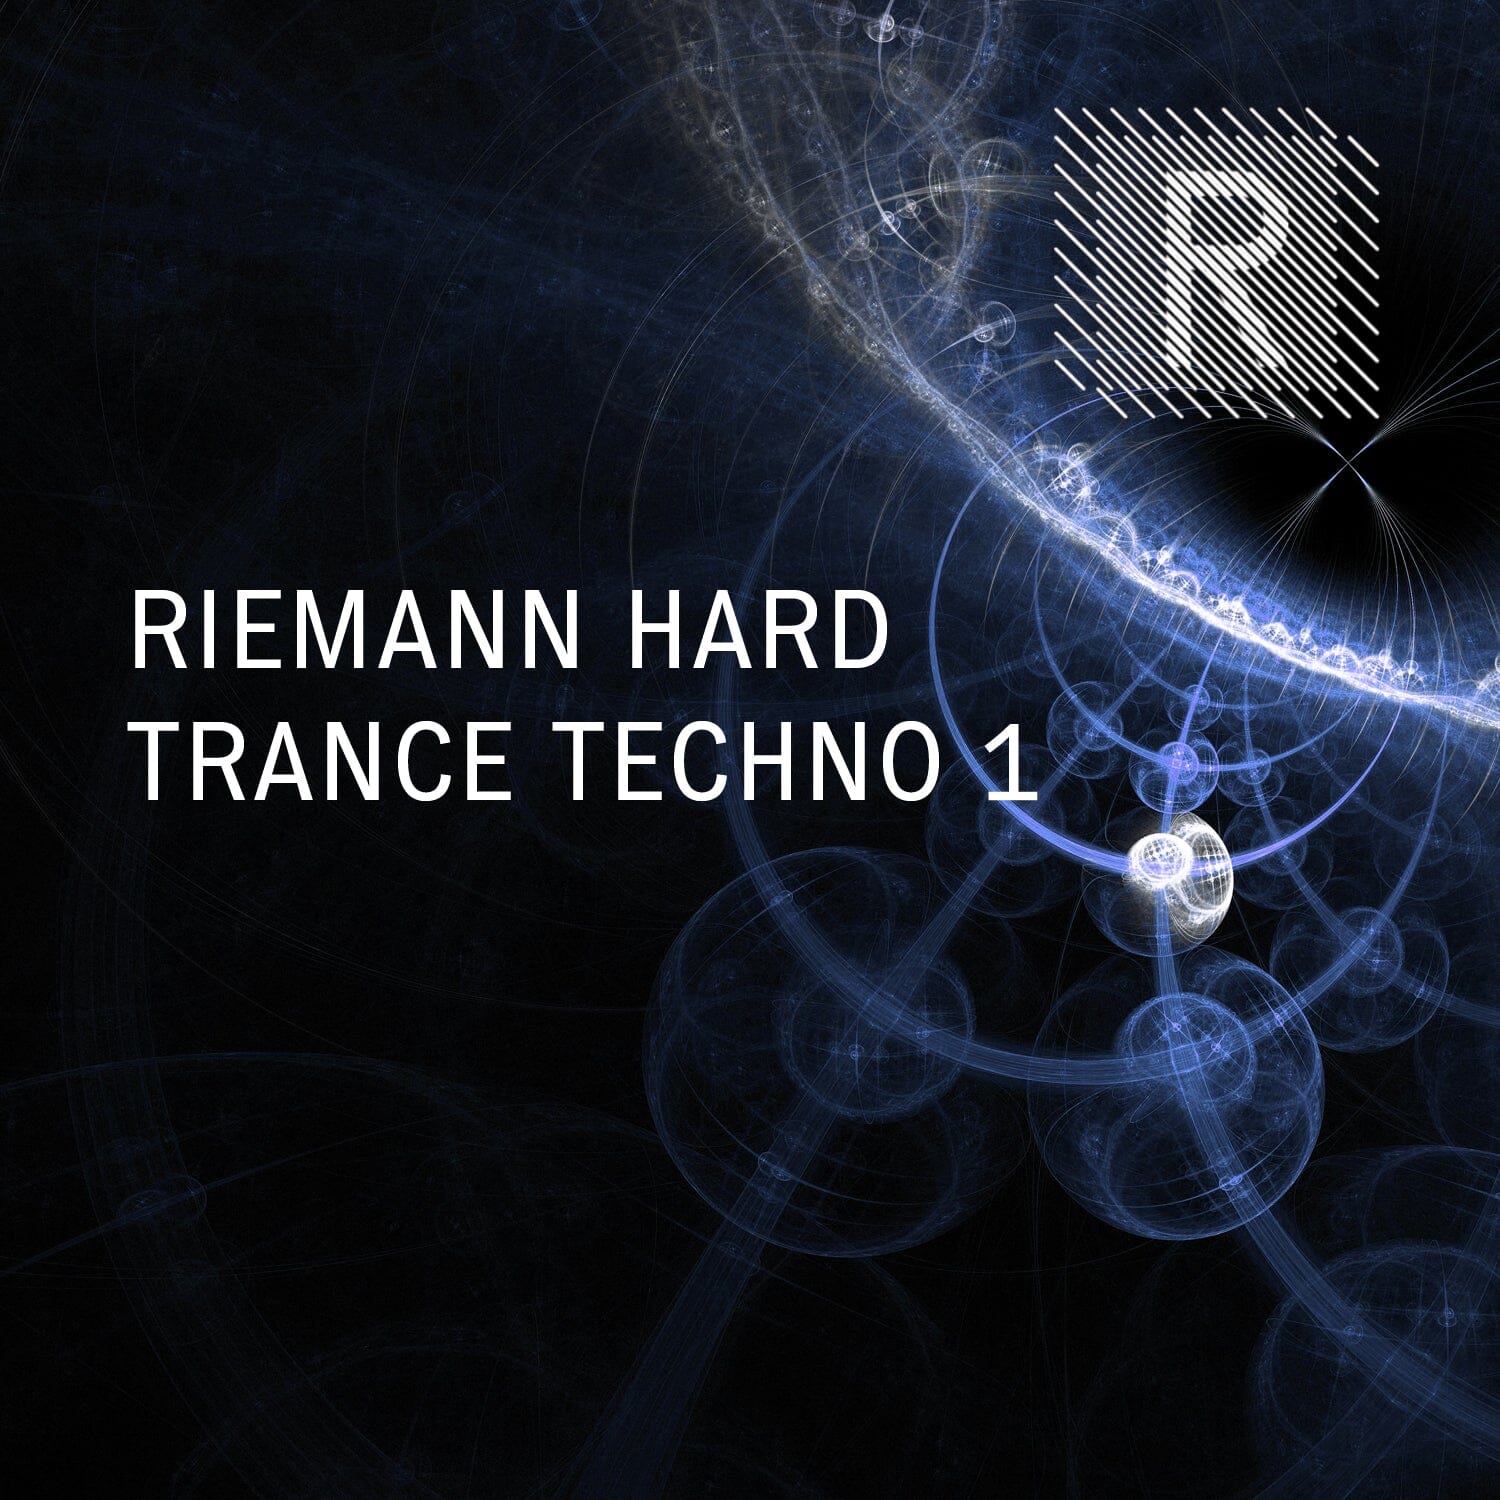 Riemann Hard Trance Techno 1 (Techno - Drums - Oneshots - Kick - Snare) Sample Pack Riemann Kollektion